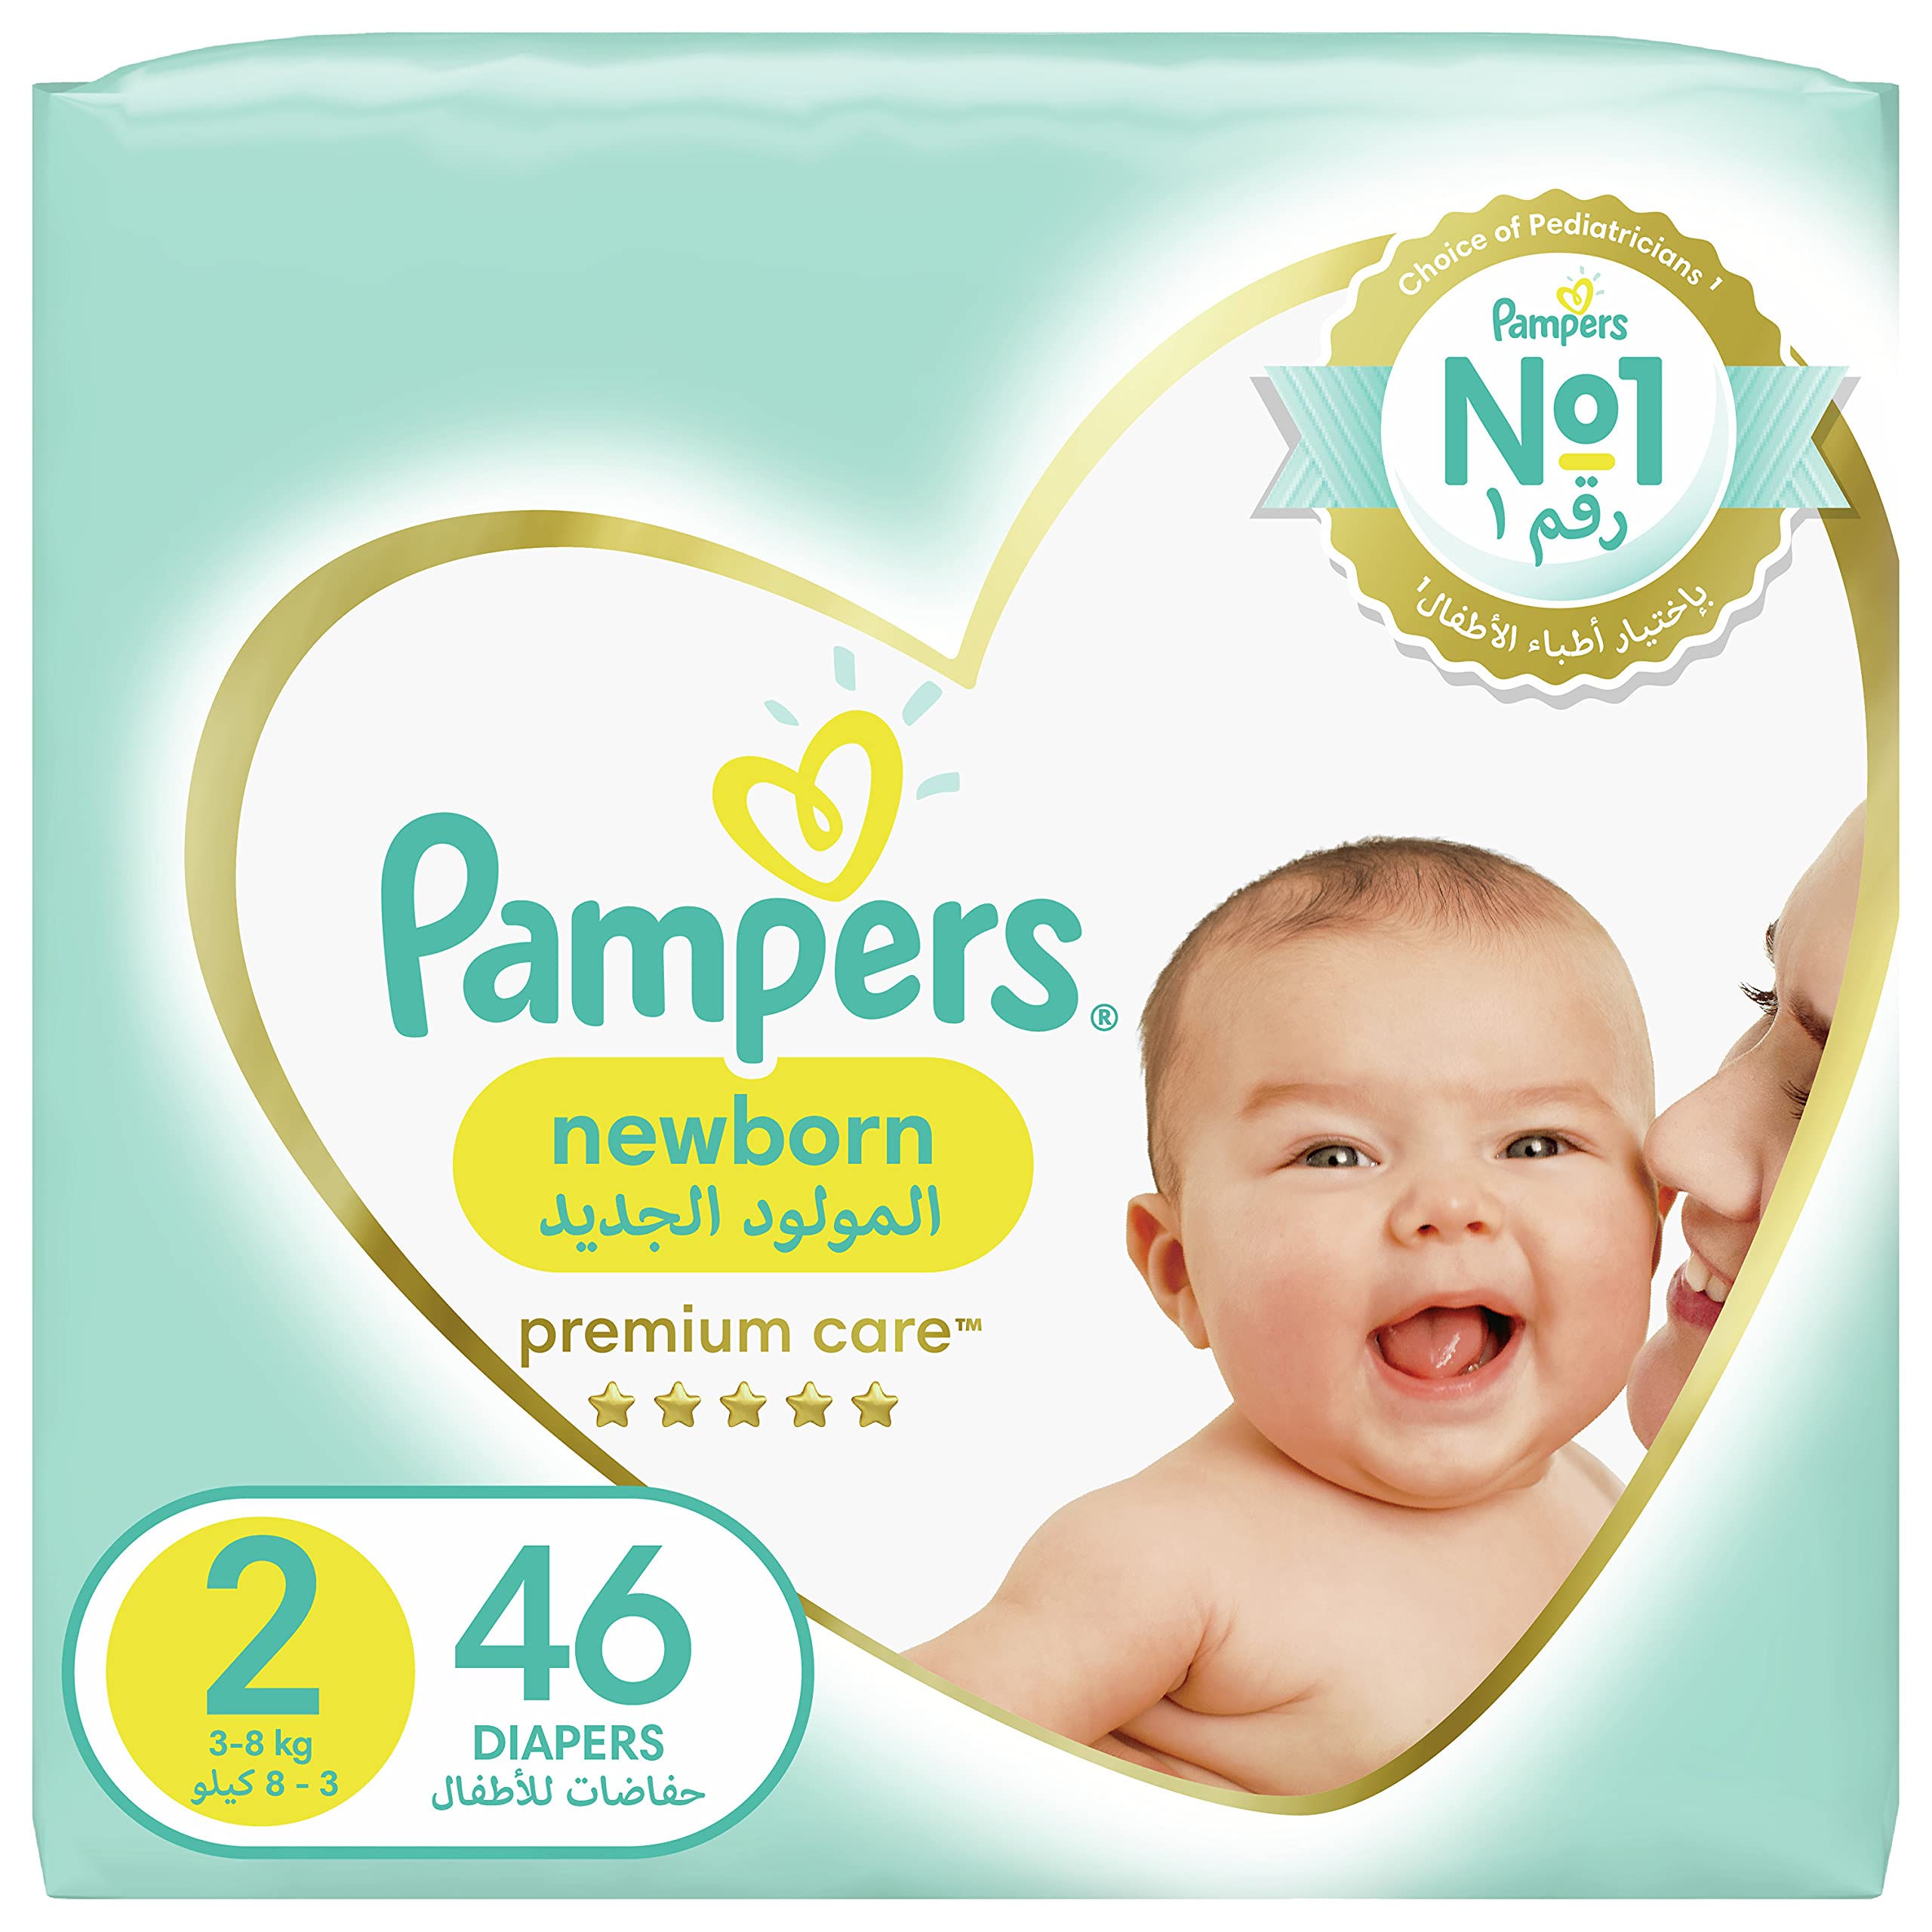 Pampers Premium Care newborn Diapers Size 2, 3-8kg, 46 Piece حفاضات بامبرز عناية مميّزة، مقاس 2، صغير، 3 - 6 كلغ، العبوة الاقتصادية، 46 حفاضاً